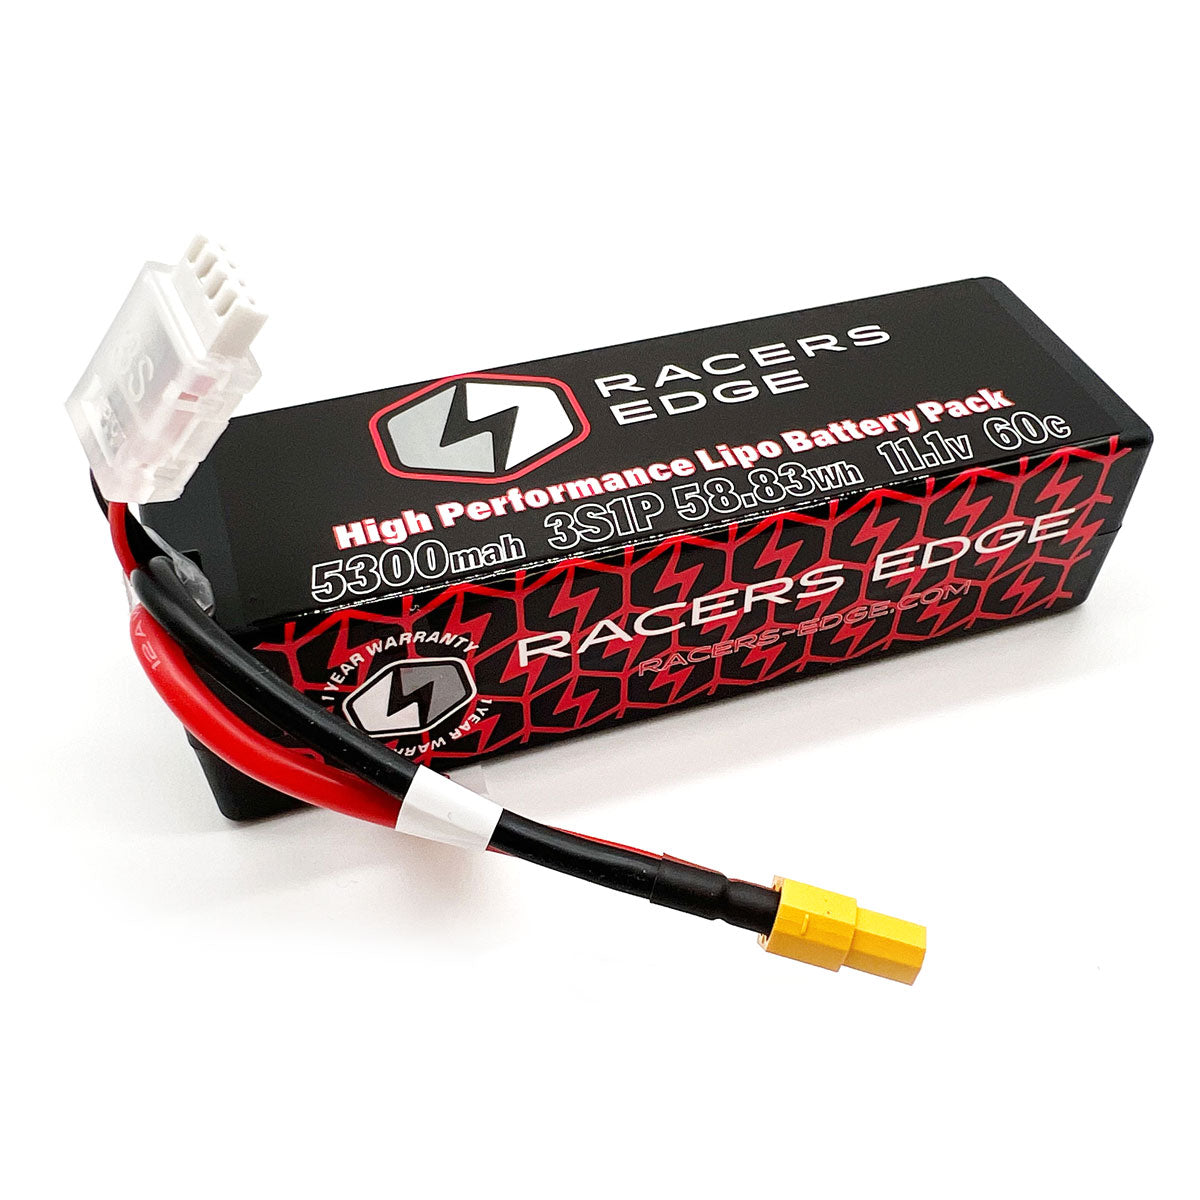 Racers Edge 5300mAh 3S 11.1V 60C Hard Case Lipo Battery w/ XT60 Connector LP53003S60XT60